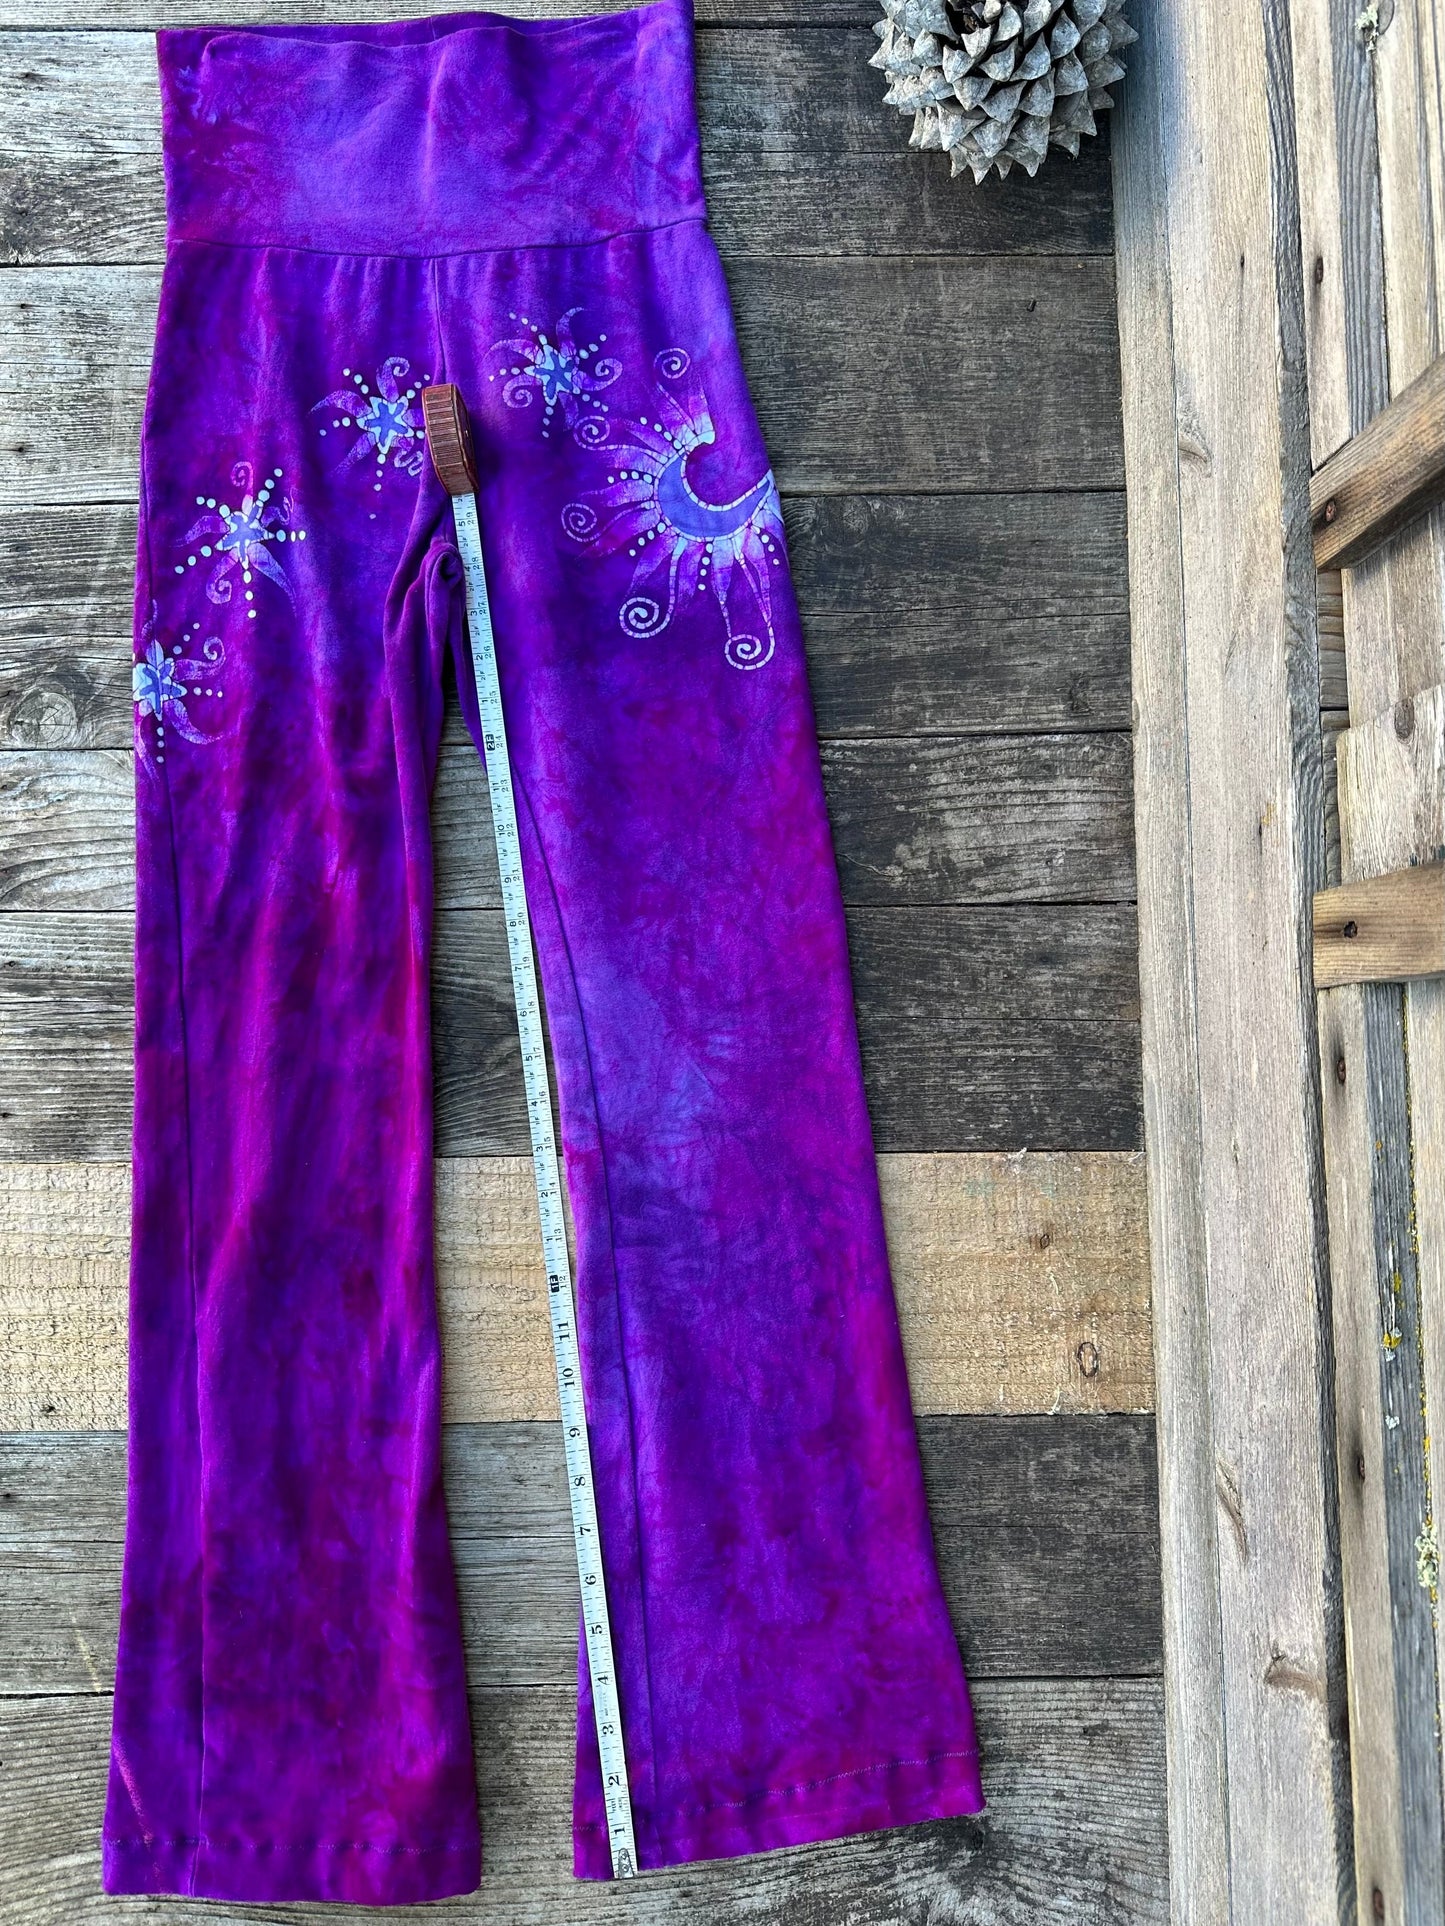 Hot Pink Moonflowers Stretchy Lounge Pants - Size Small Yoga Pants batikwalla Small 